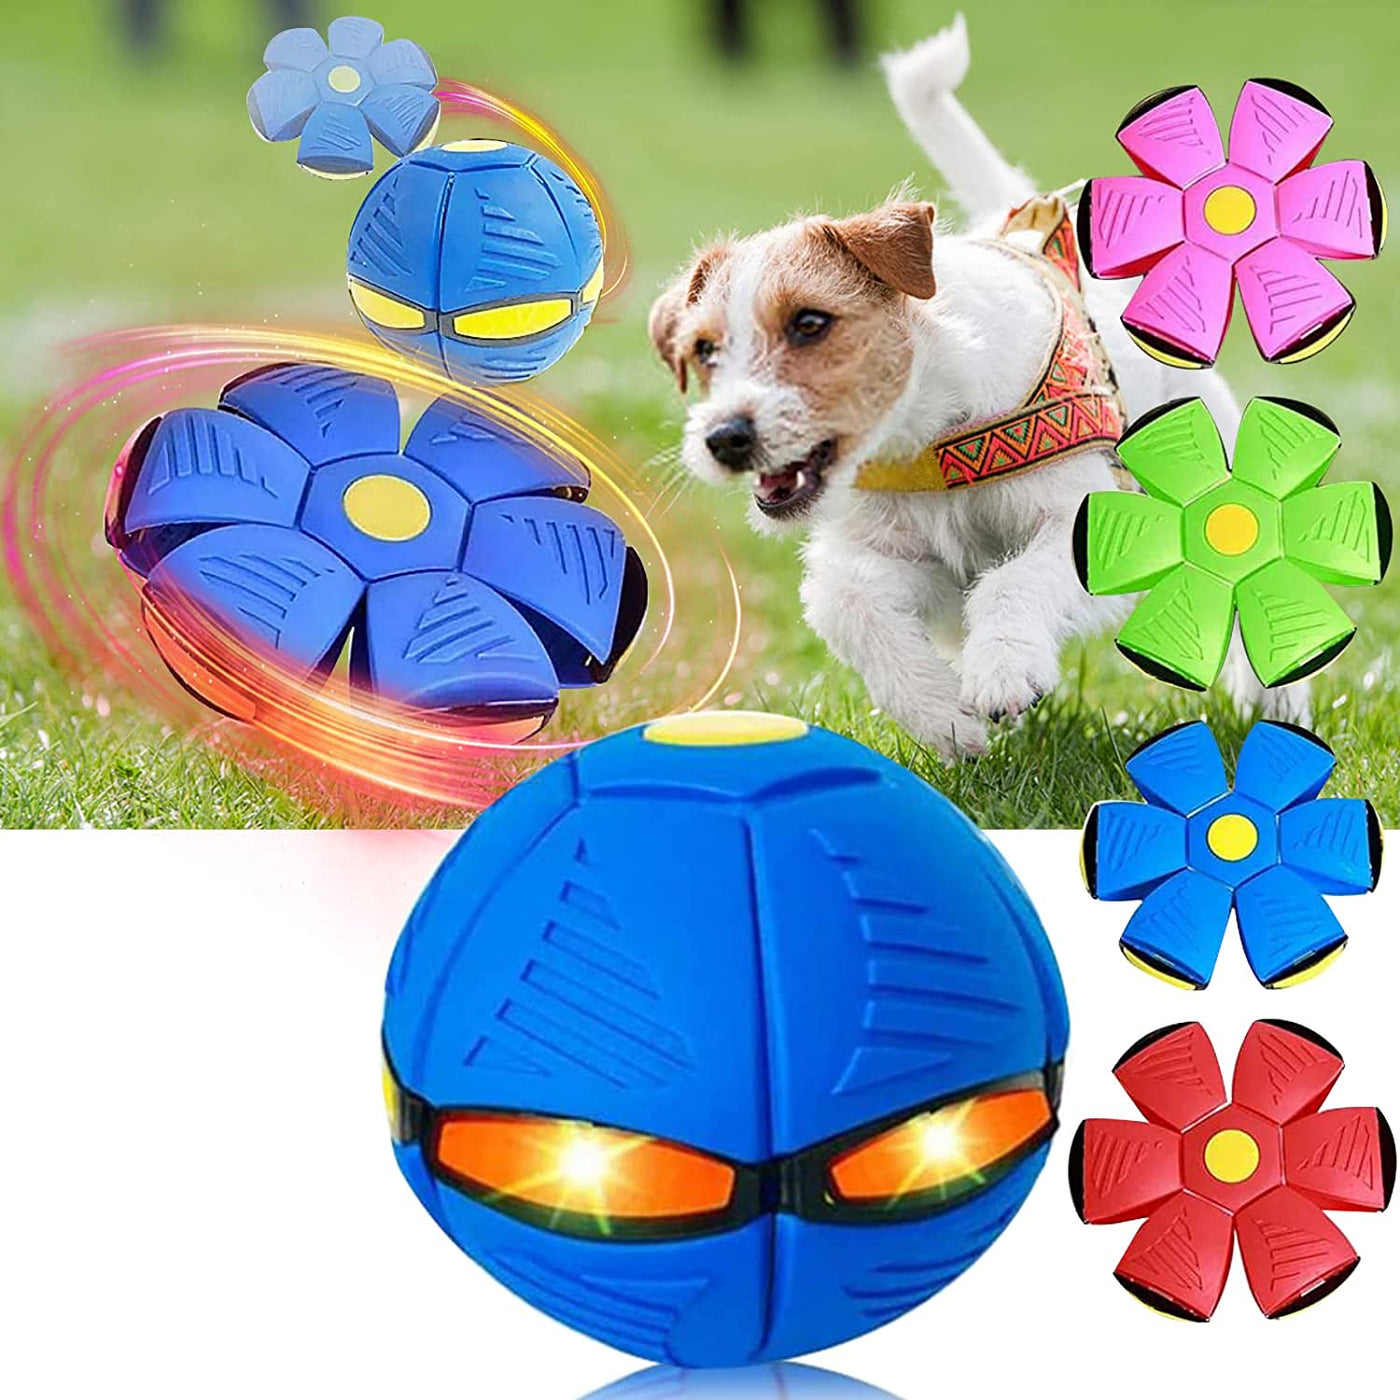 Dog Toy Magic Flying Saucer Ball